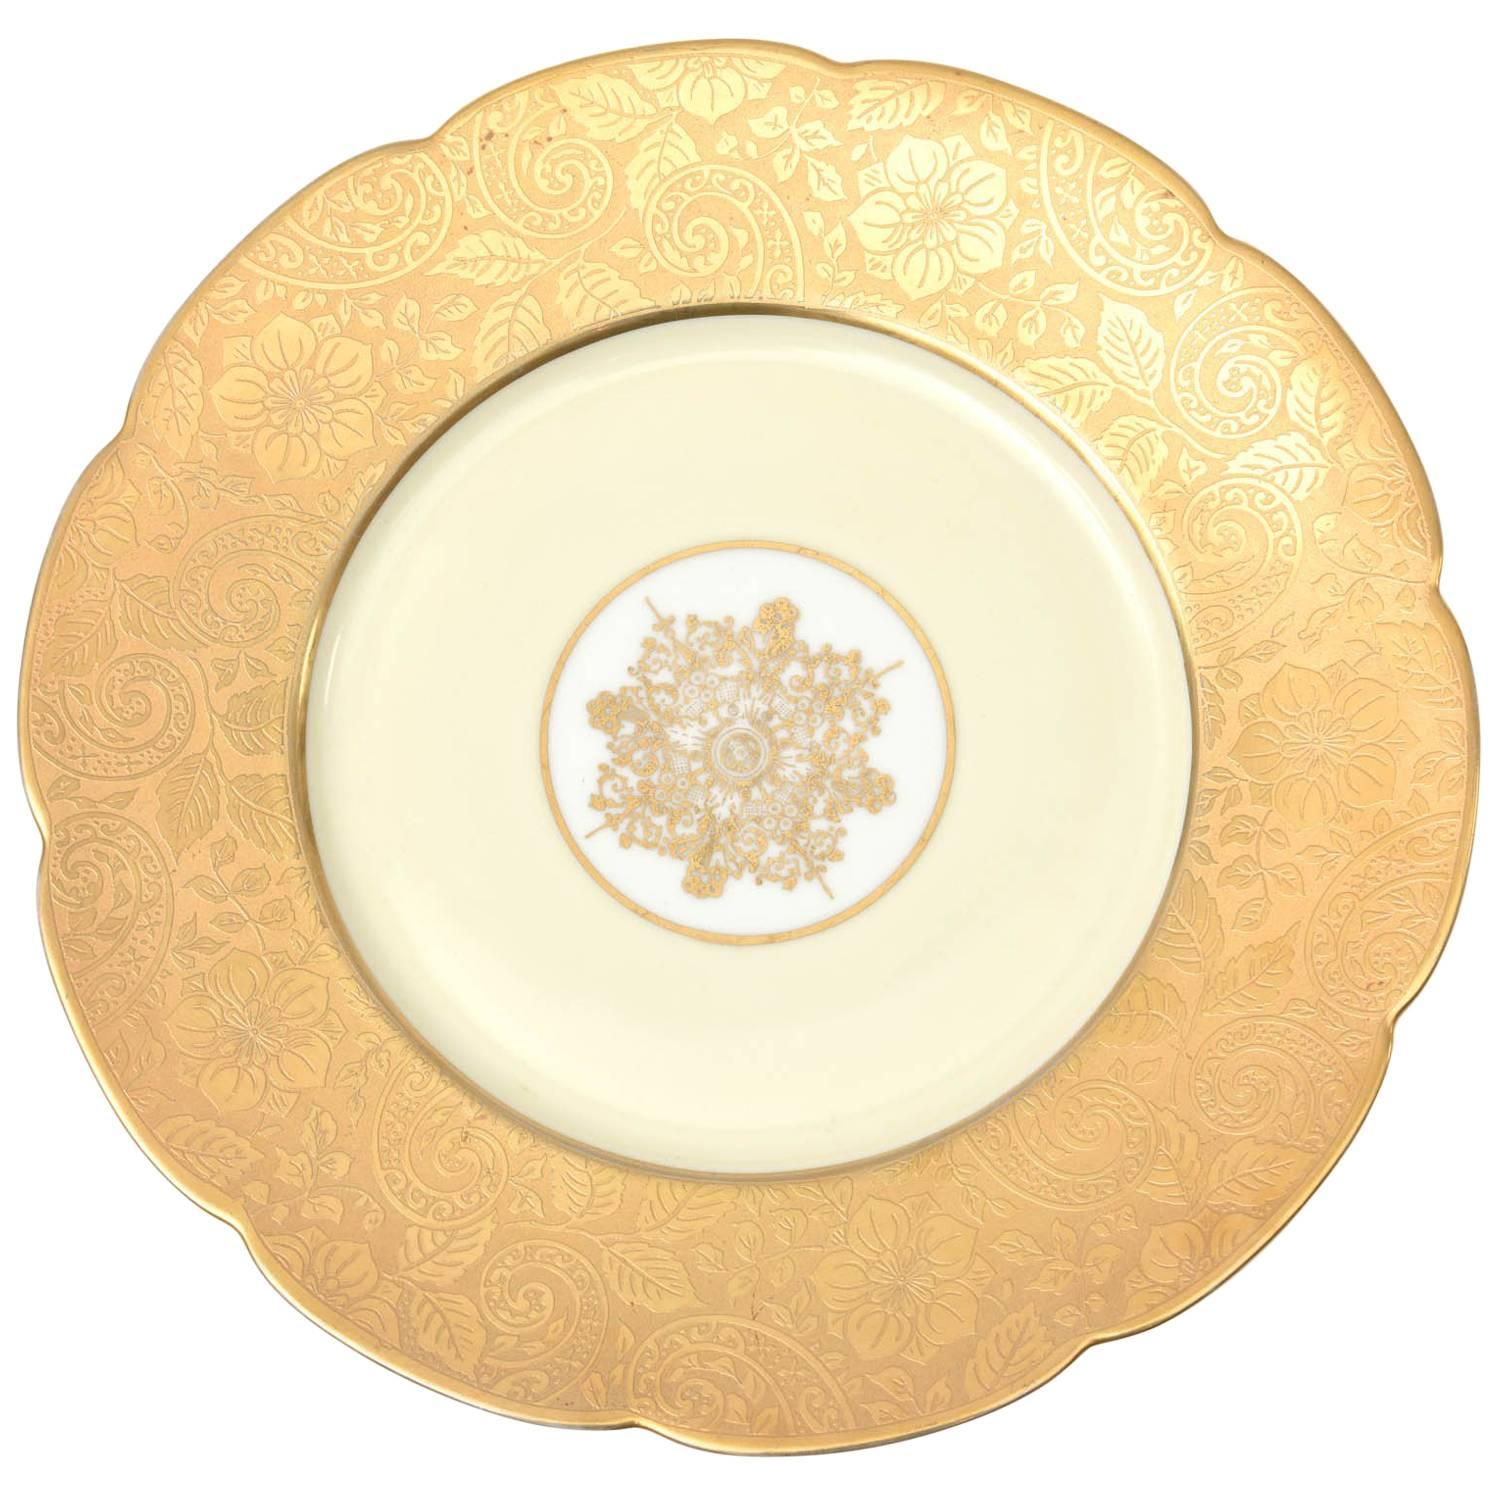 12 Elegant Presentation Plates, Antique with Center Medallion